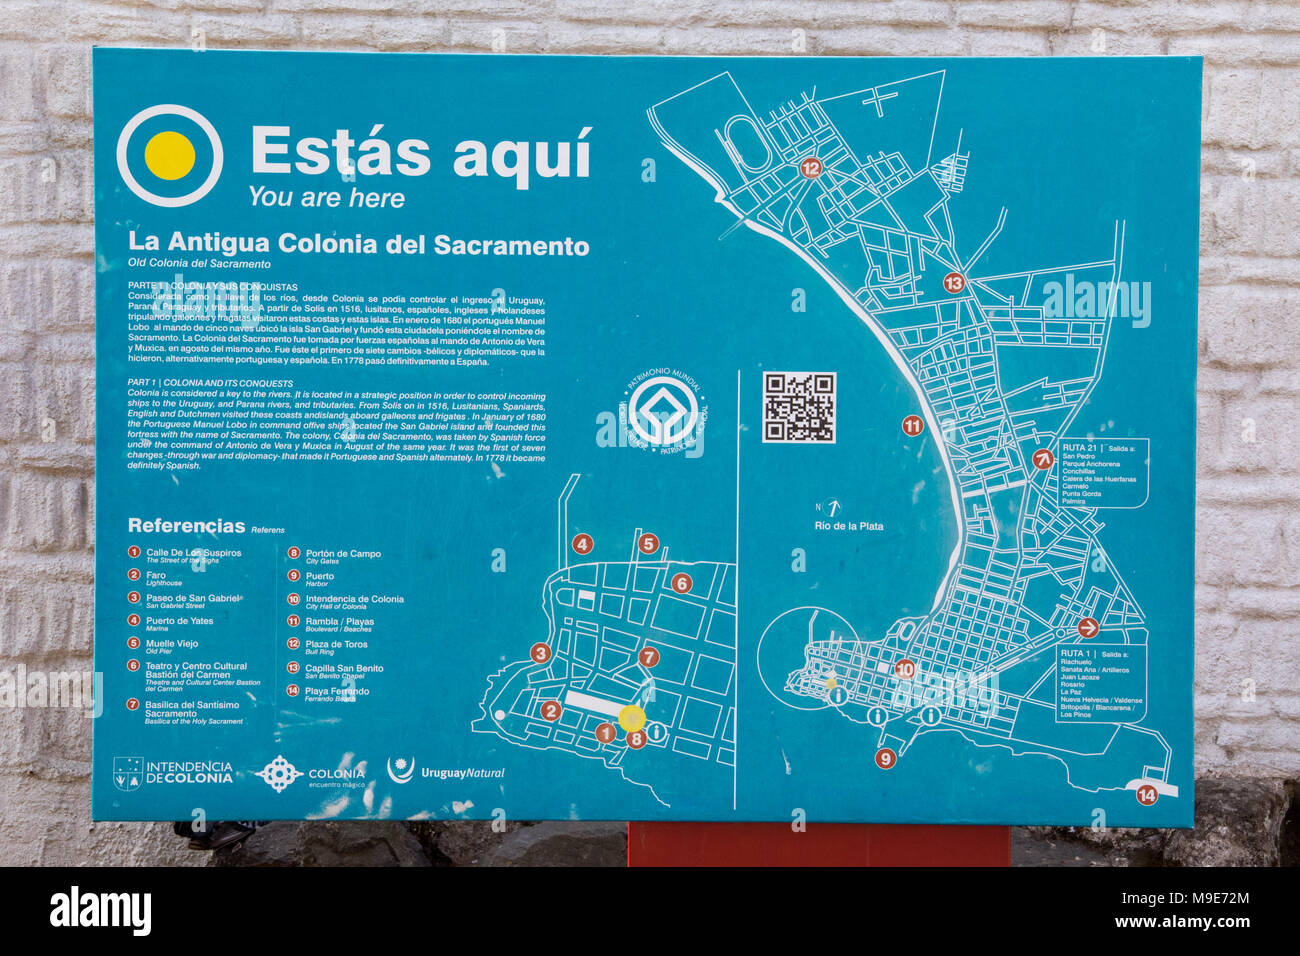 Plan de la Antigua Colonia del Sacramento, Uruguay Banque D'Images